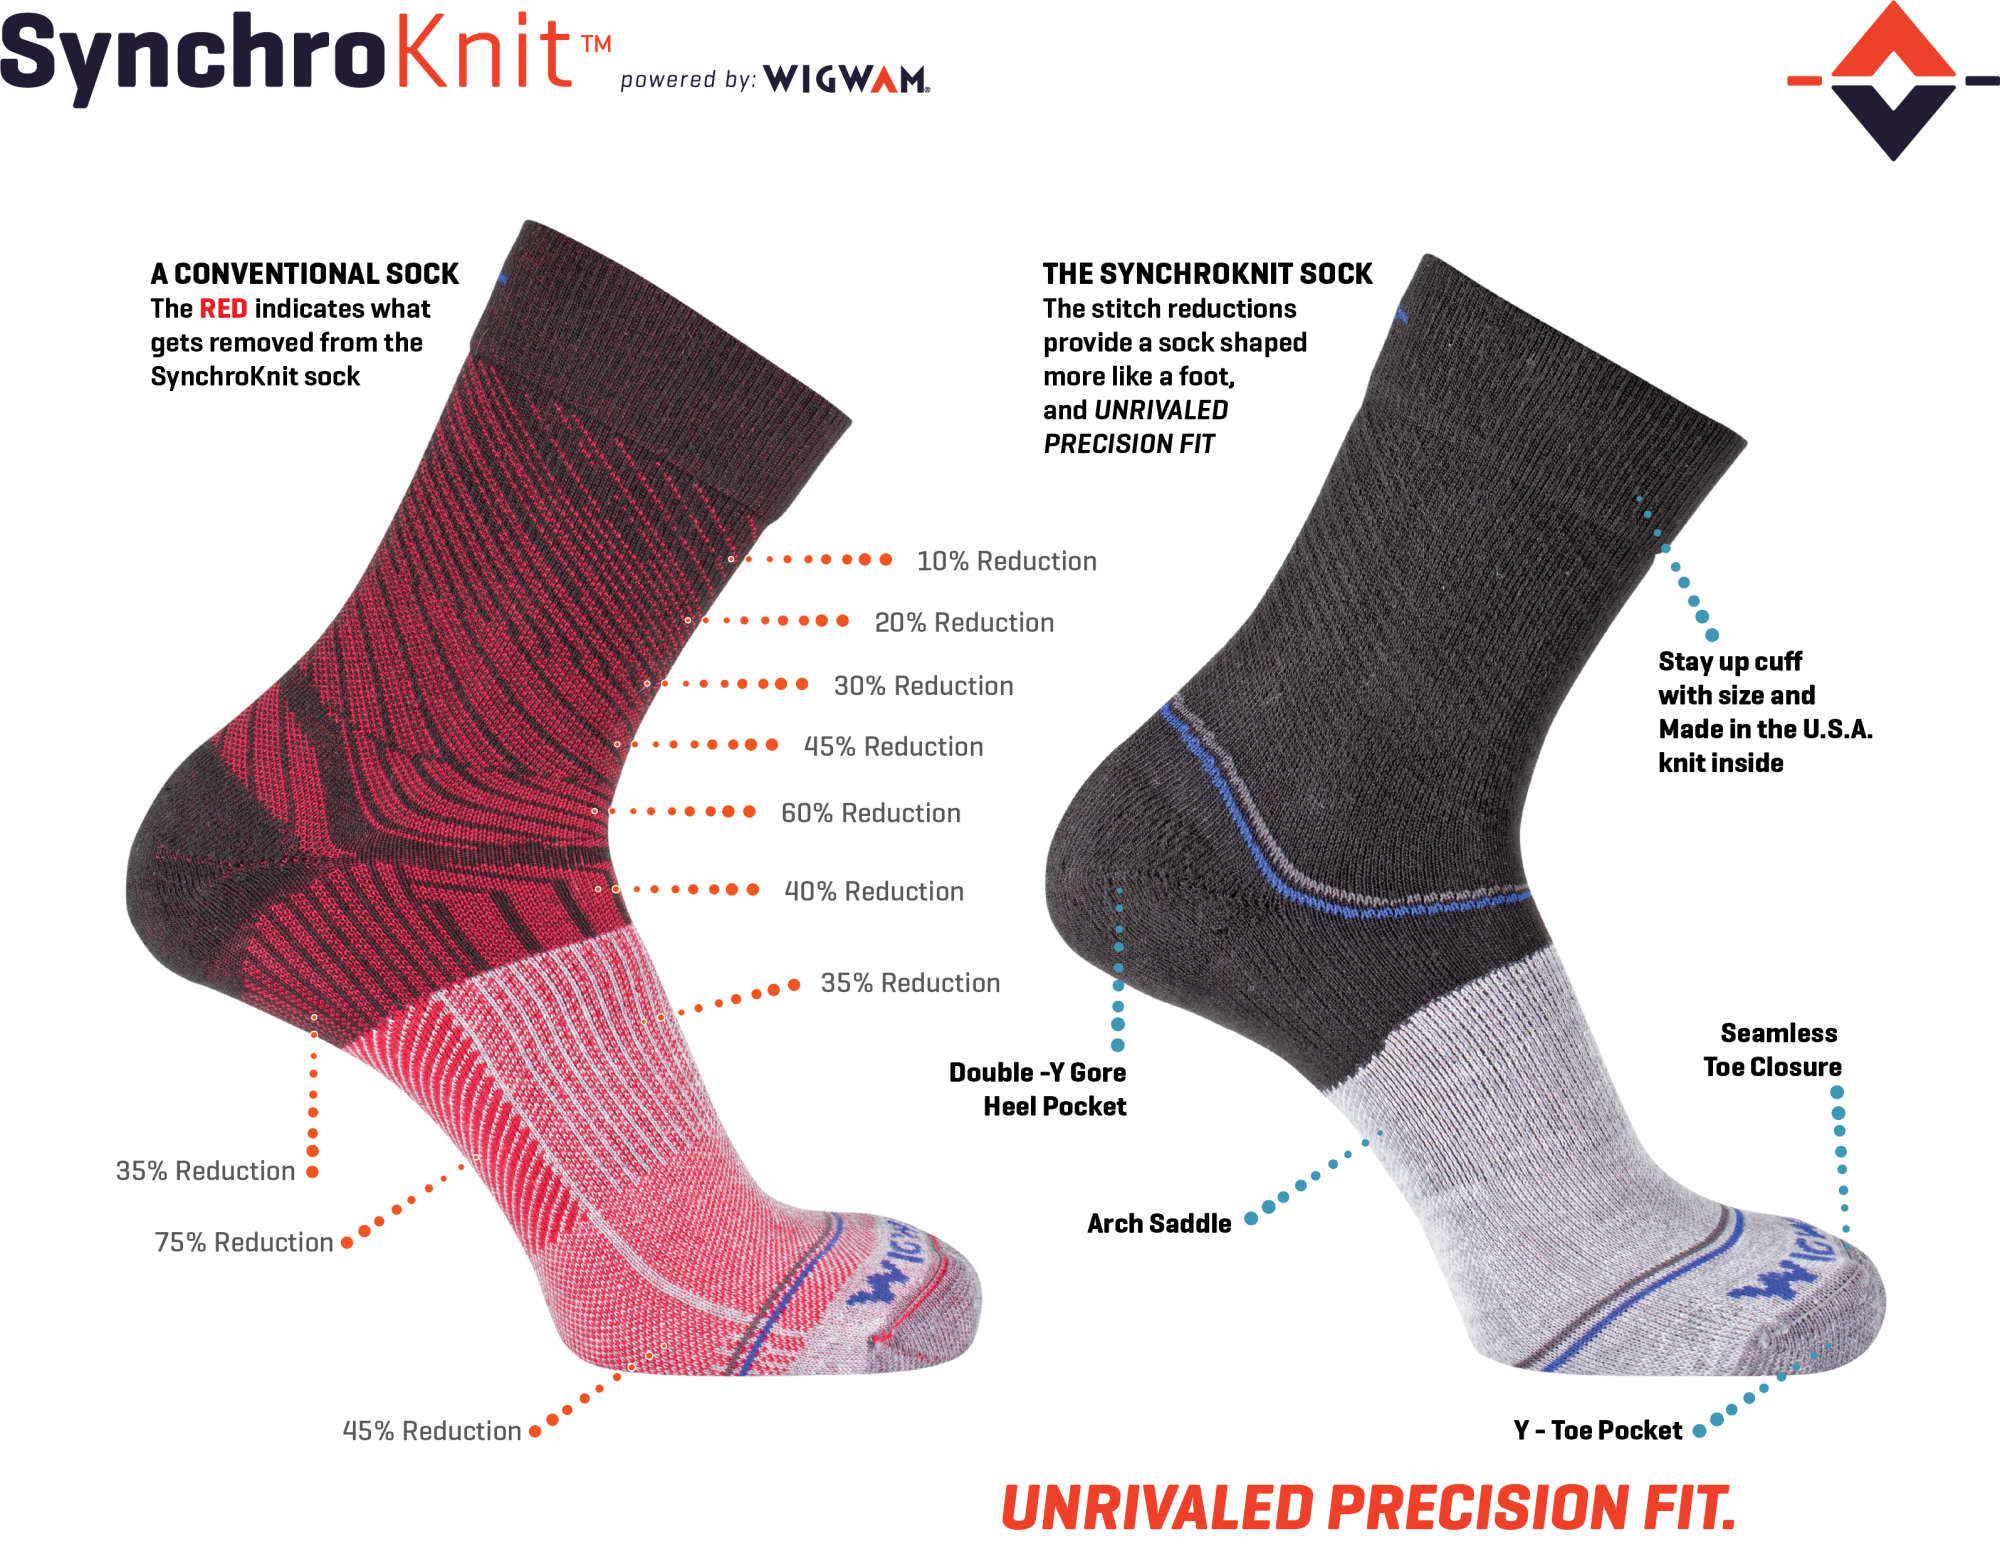 comparison chart: wigwam synchroknit and traditional socks